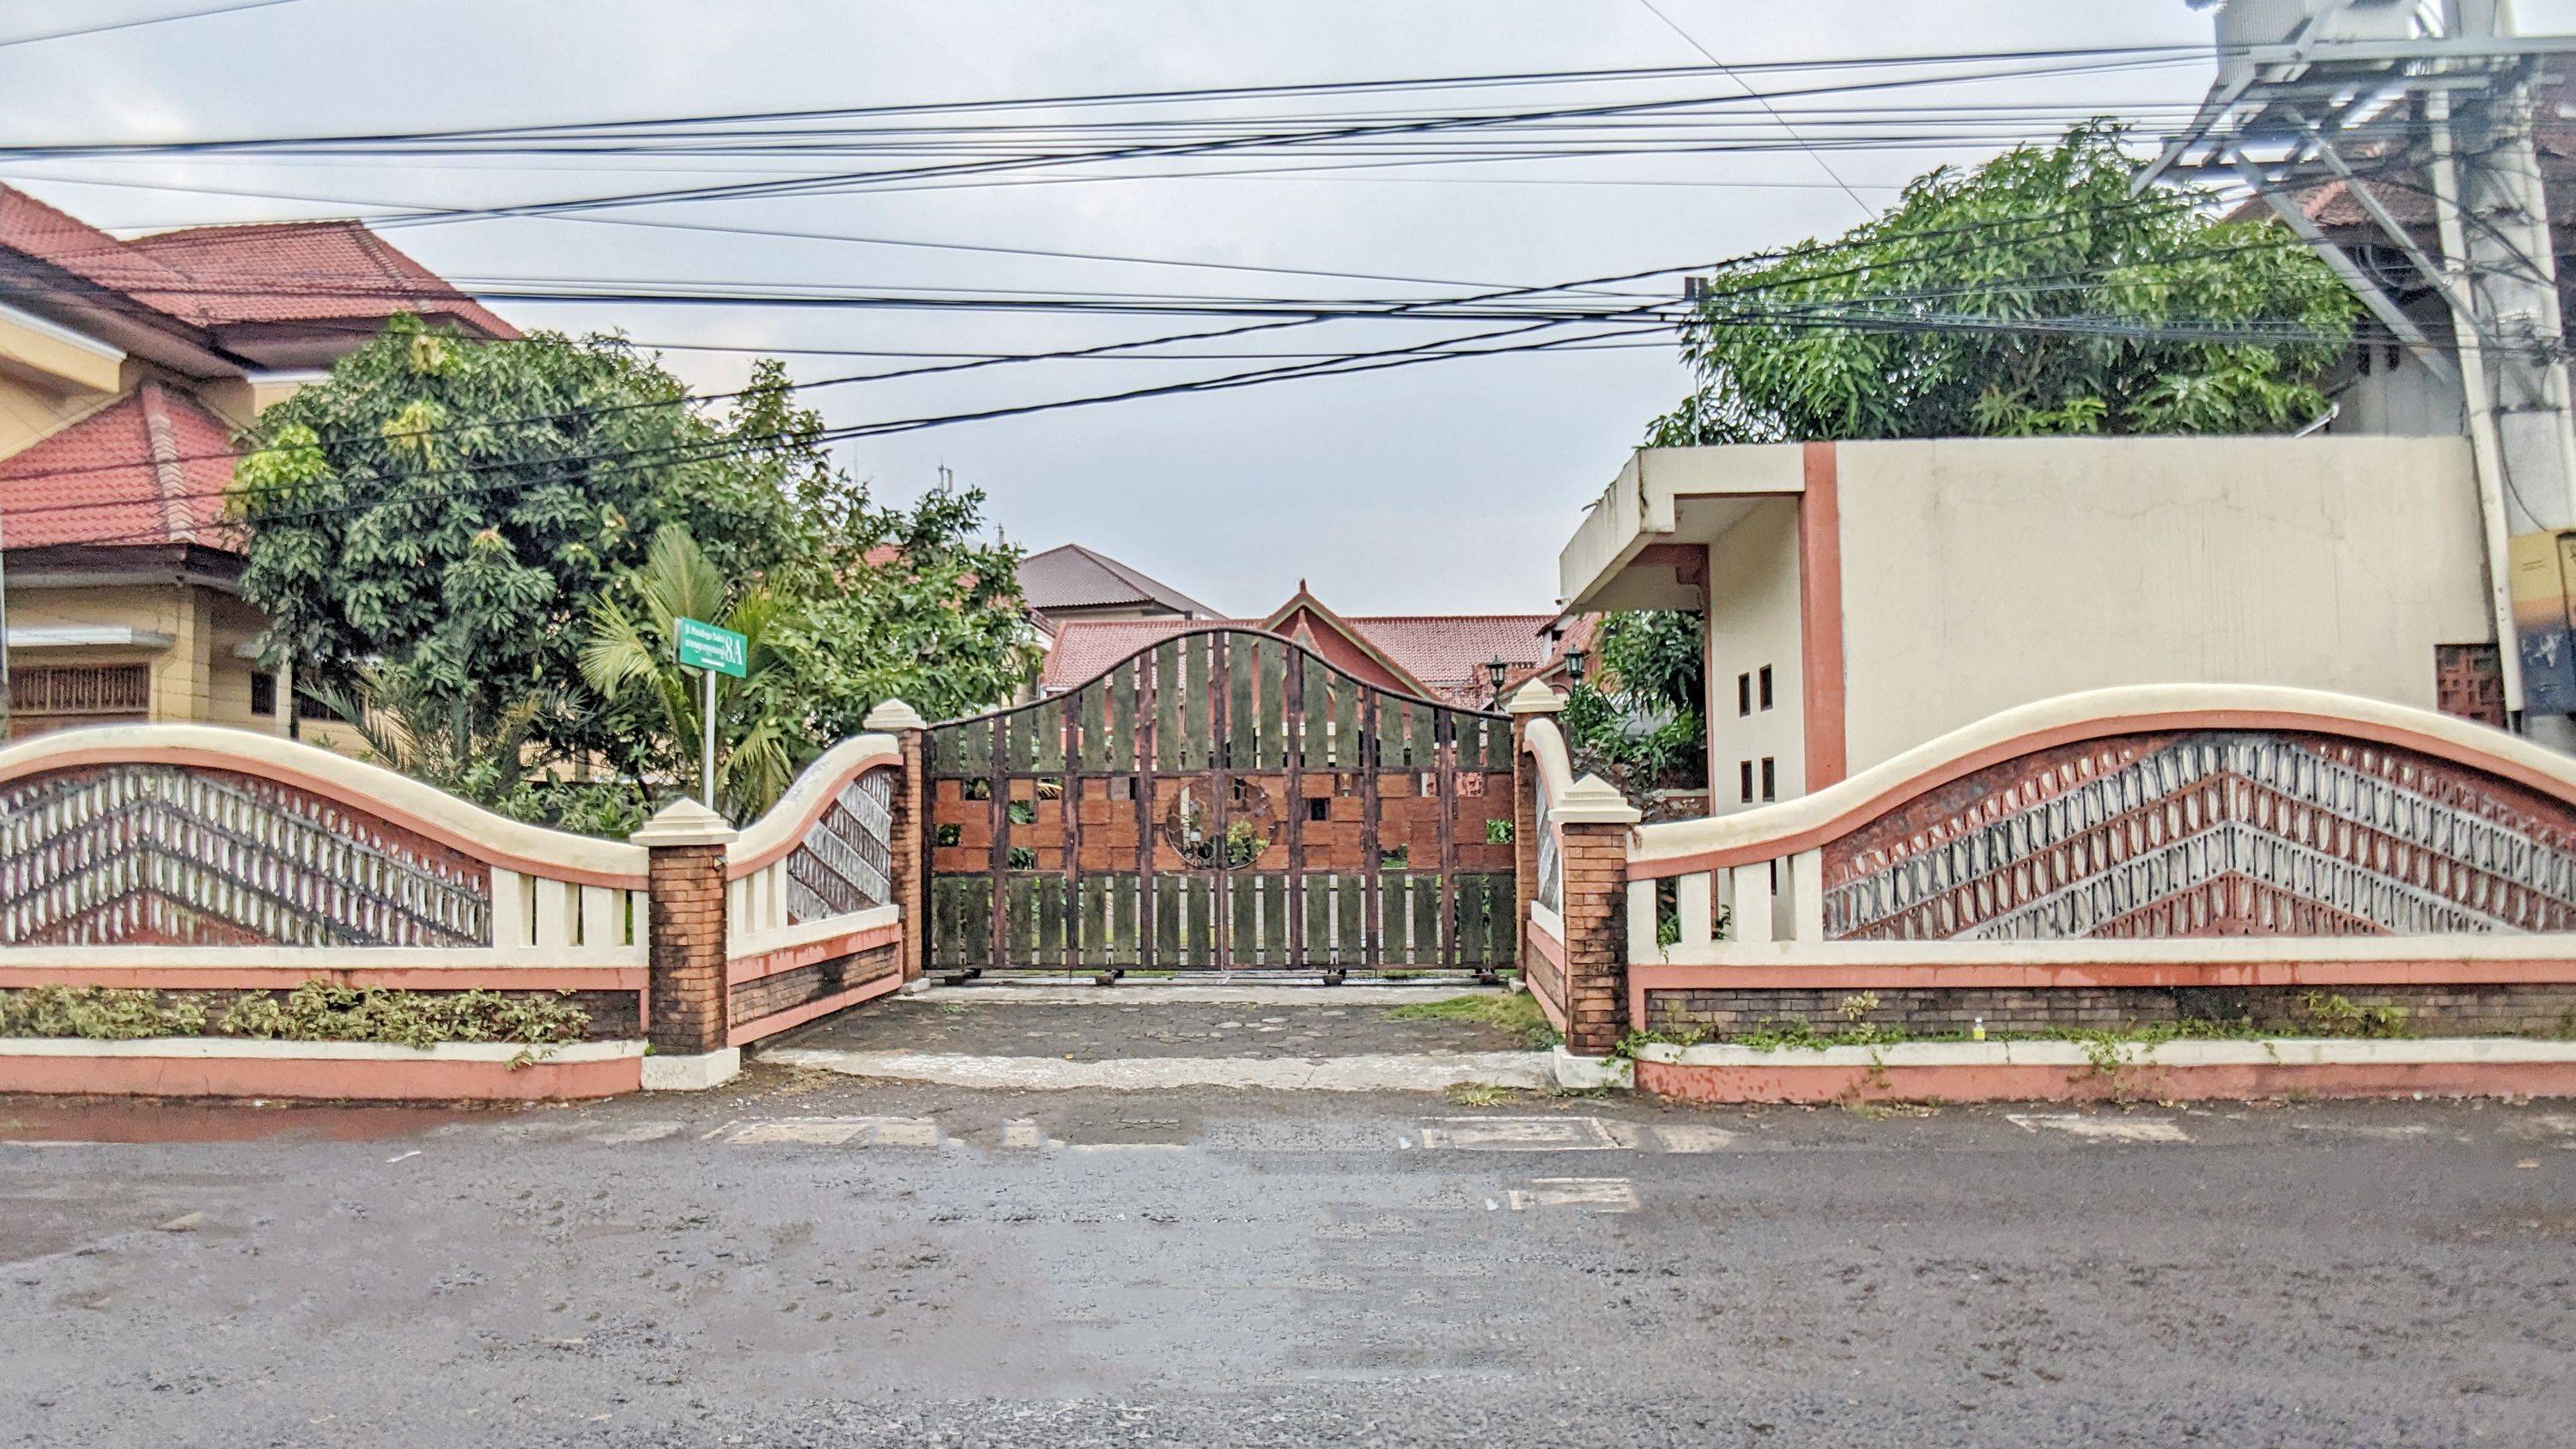 D'Real House Exclusive Caturtunggal Yogyakarta Depok Catur Tunggal